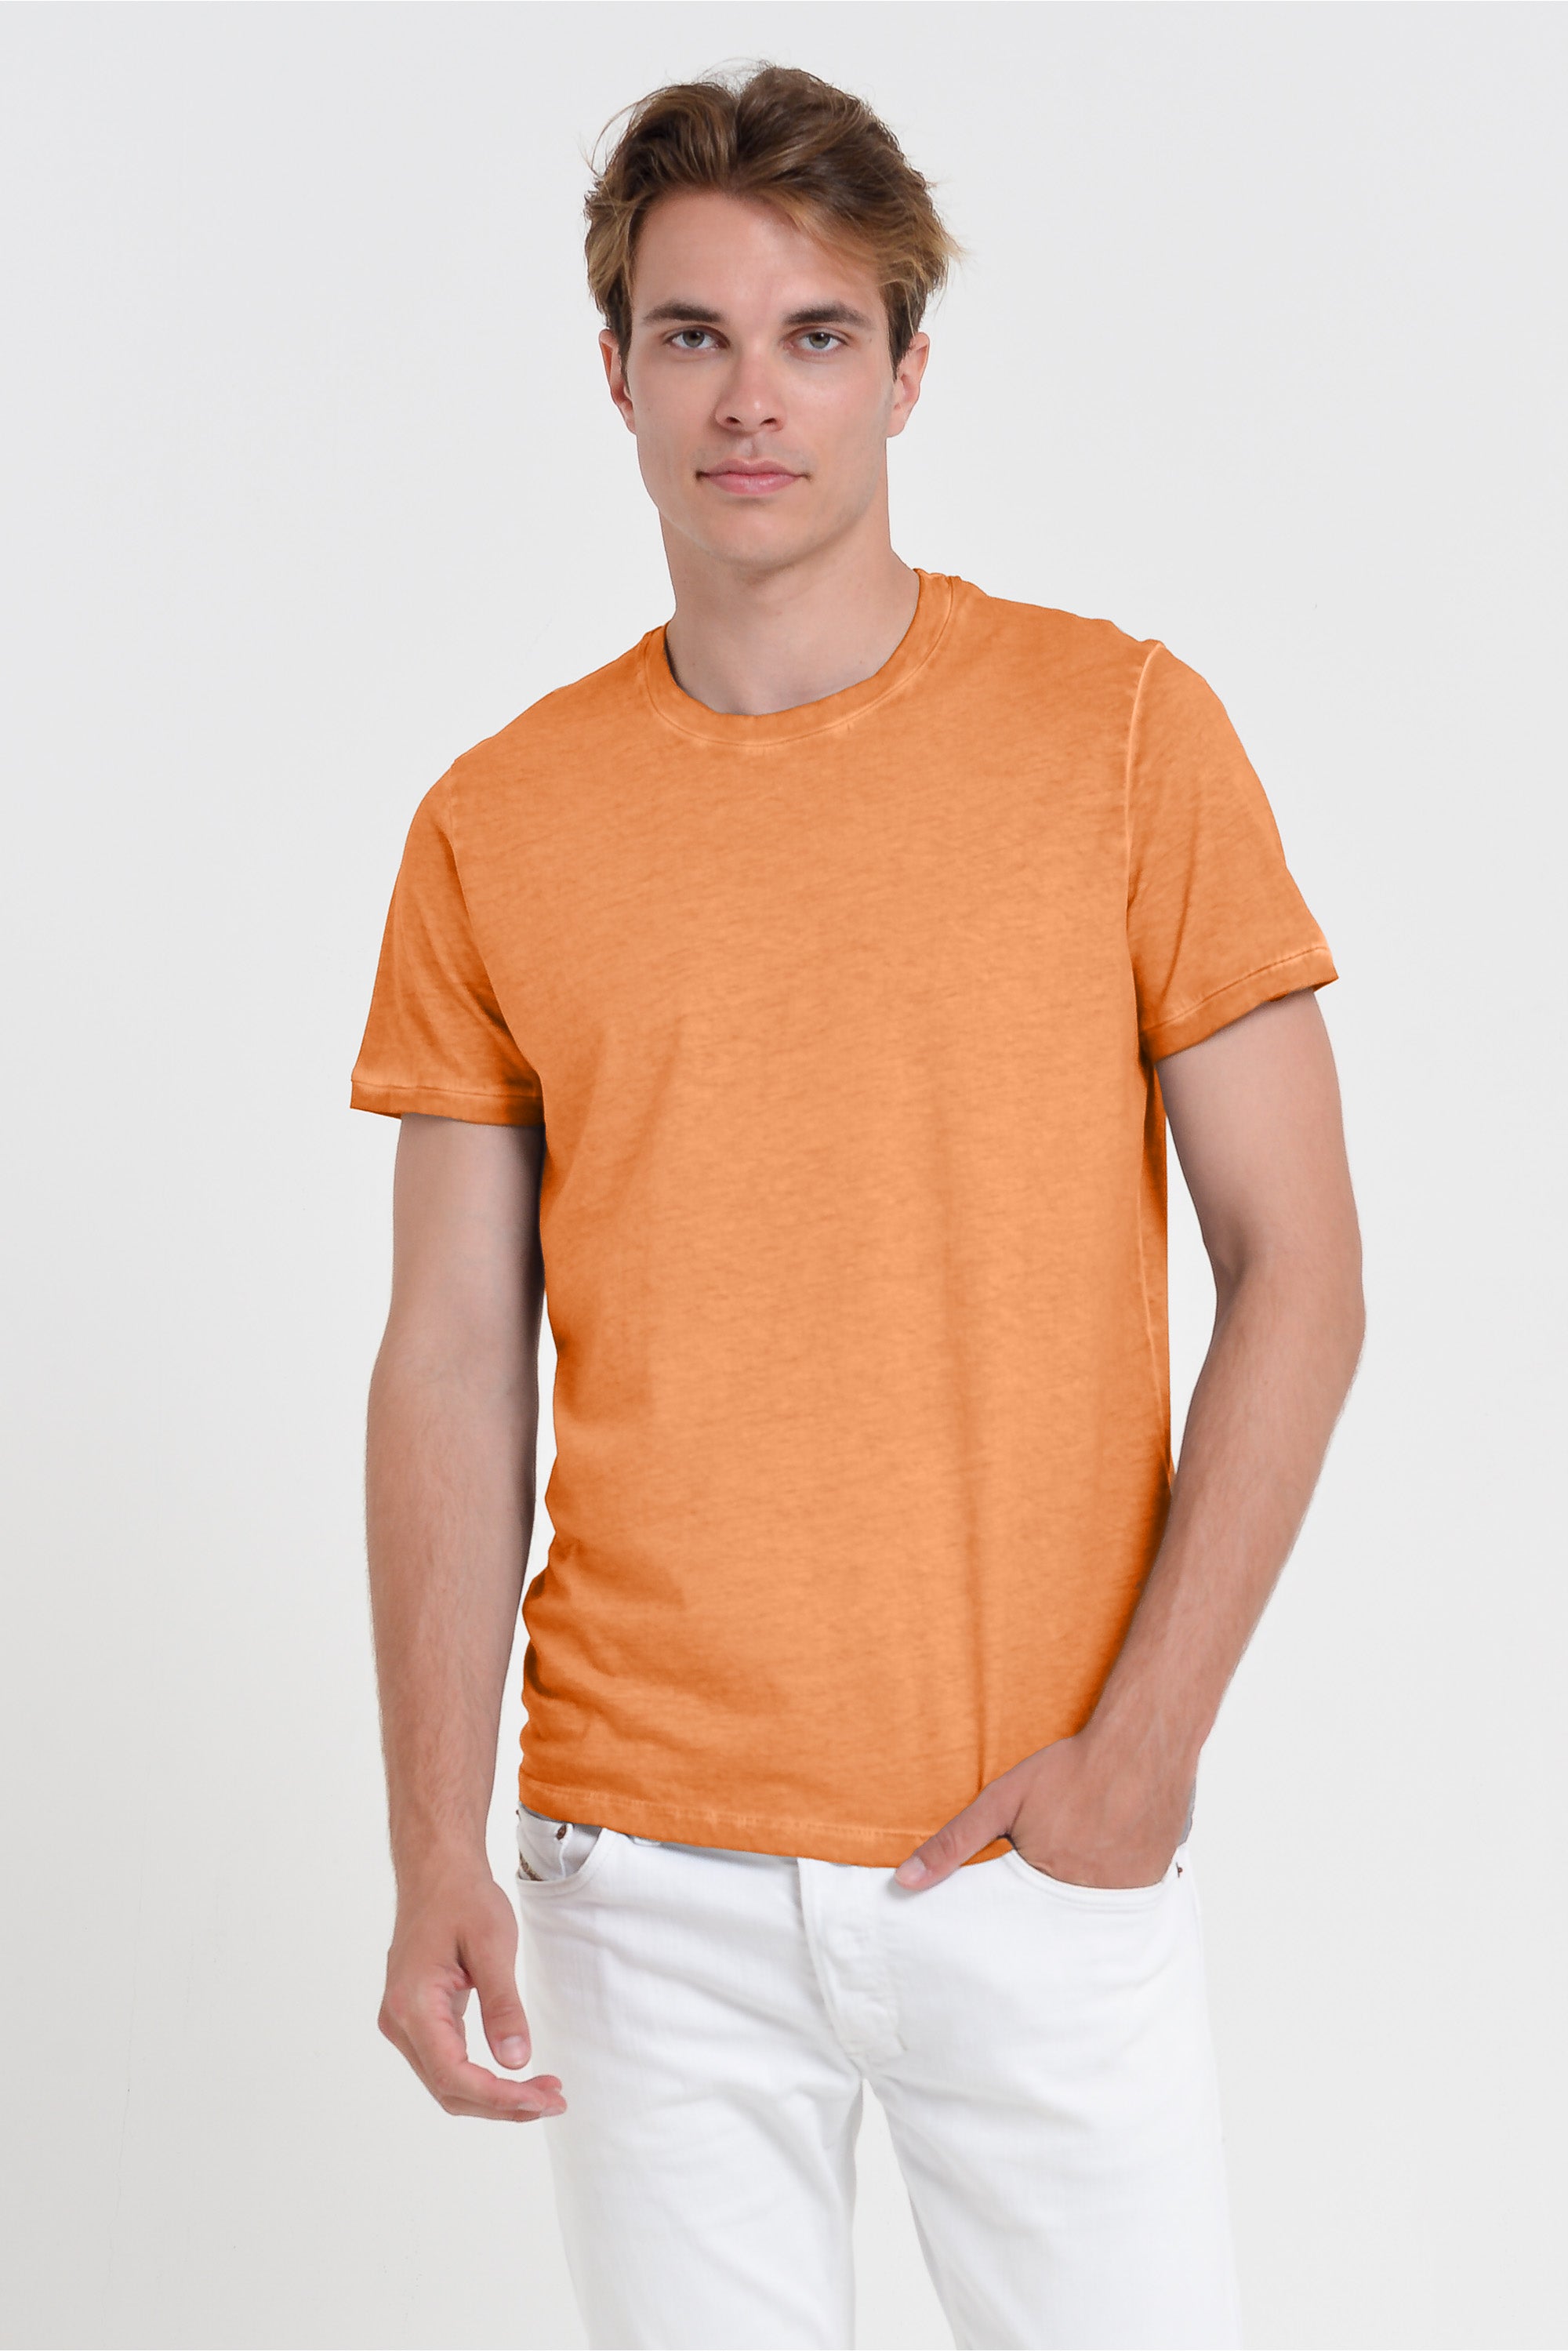 Smart Casual Cotton T-Shirt - Sundance